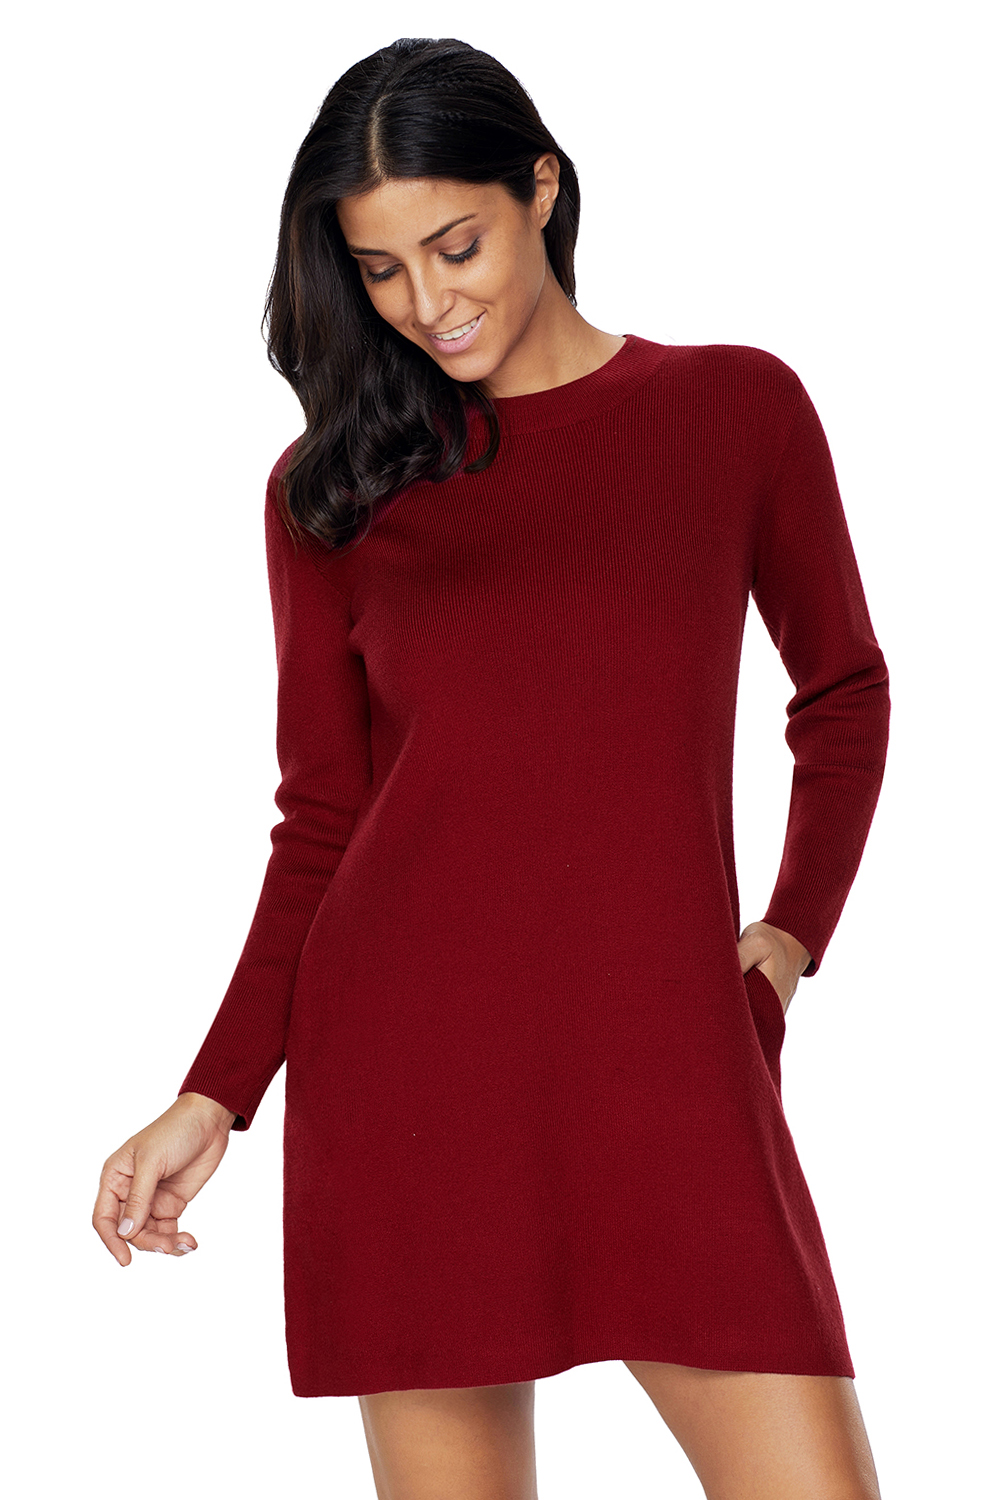 BY27712-3 Wine High Neck Long Sleeve Knit Sweater Dress